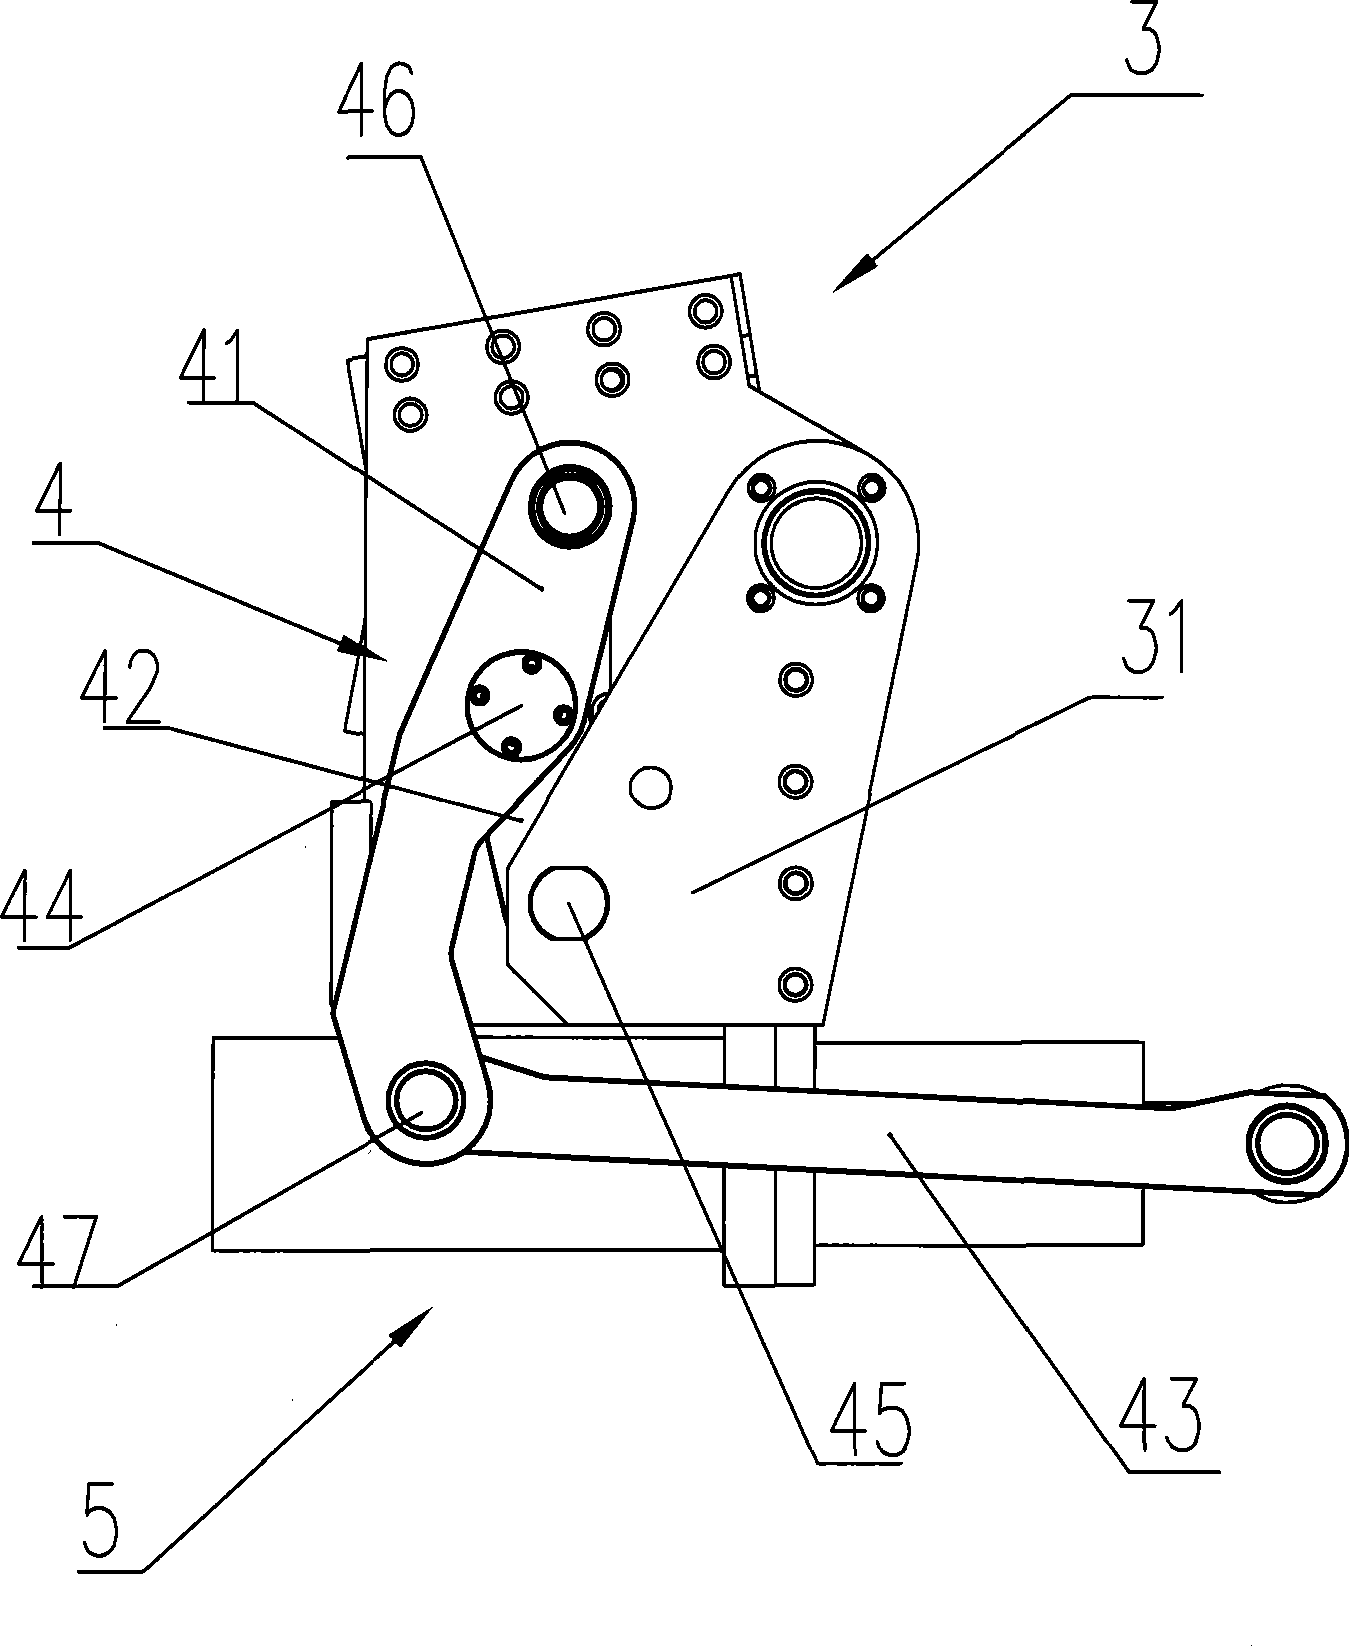 Hydraulic clamping head of rotating bending drawframe